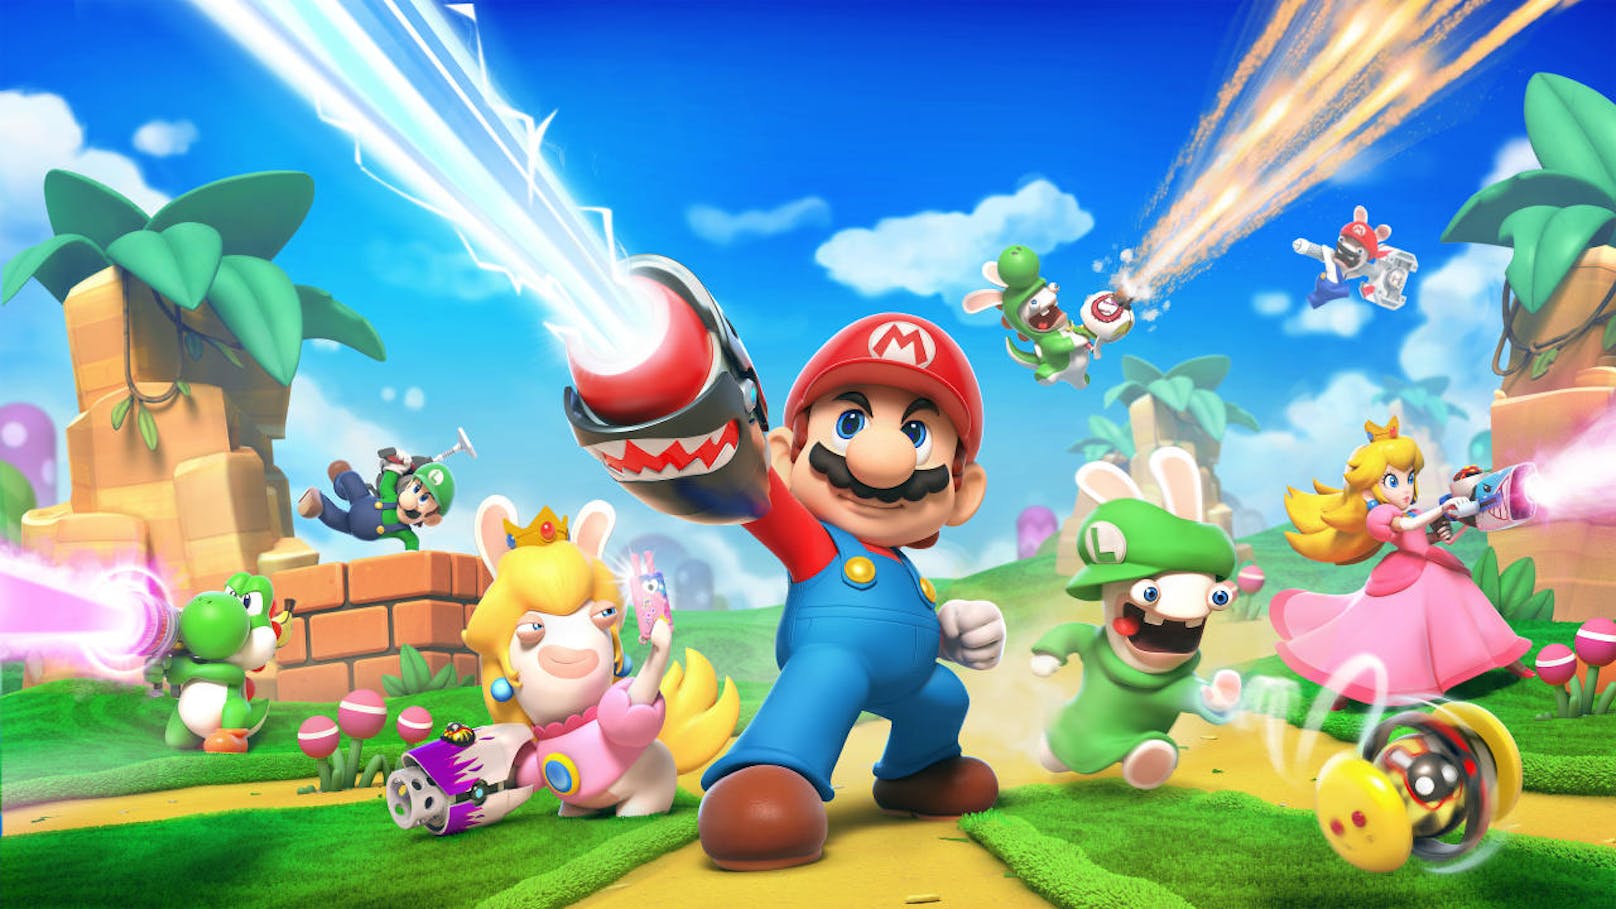 <b>Best Strategy Game</b>
Mario + Rabbids Kingdom Battle